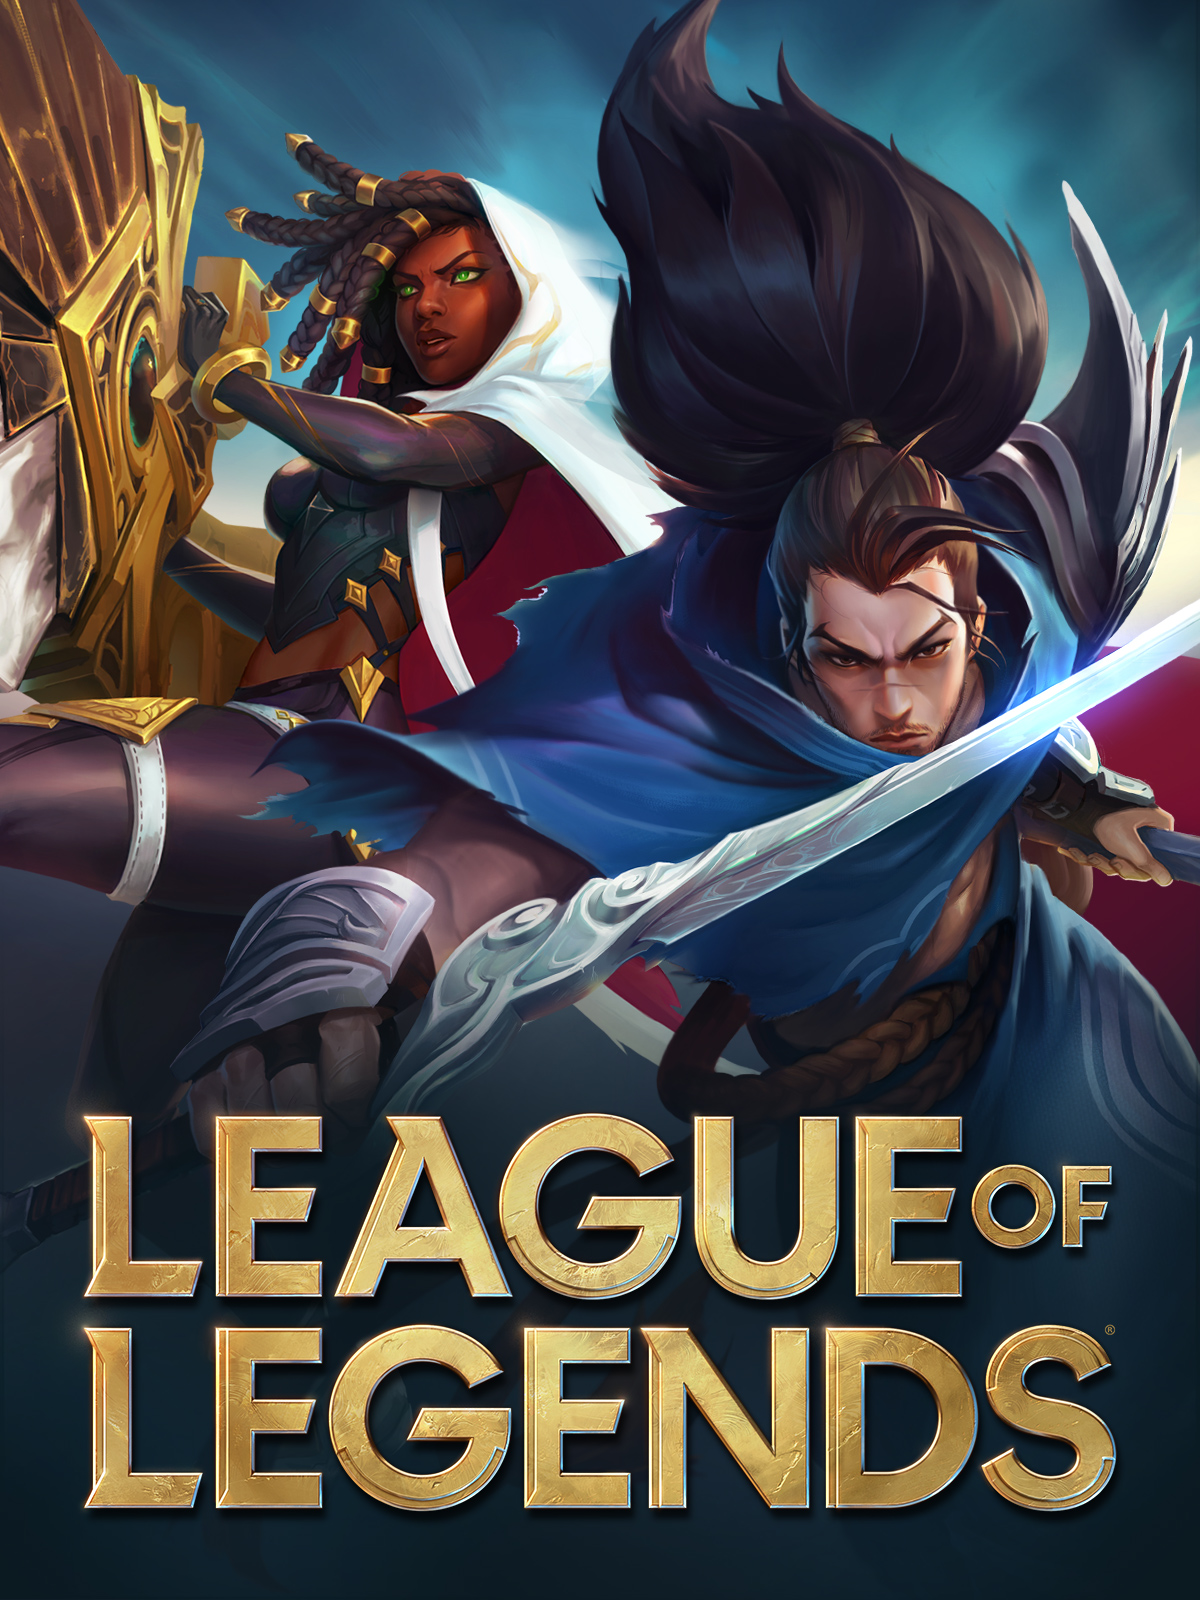 league of legends pg rating